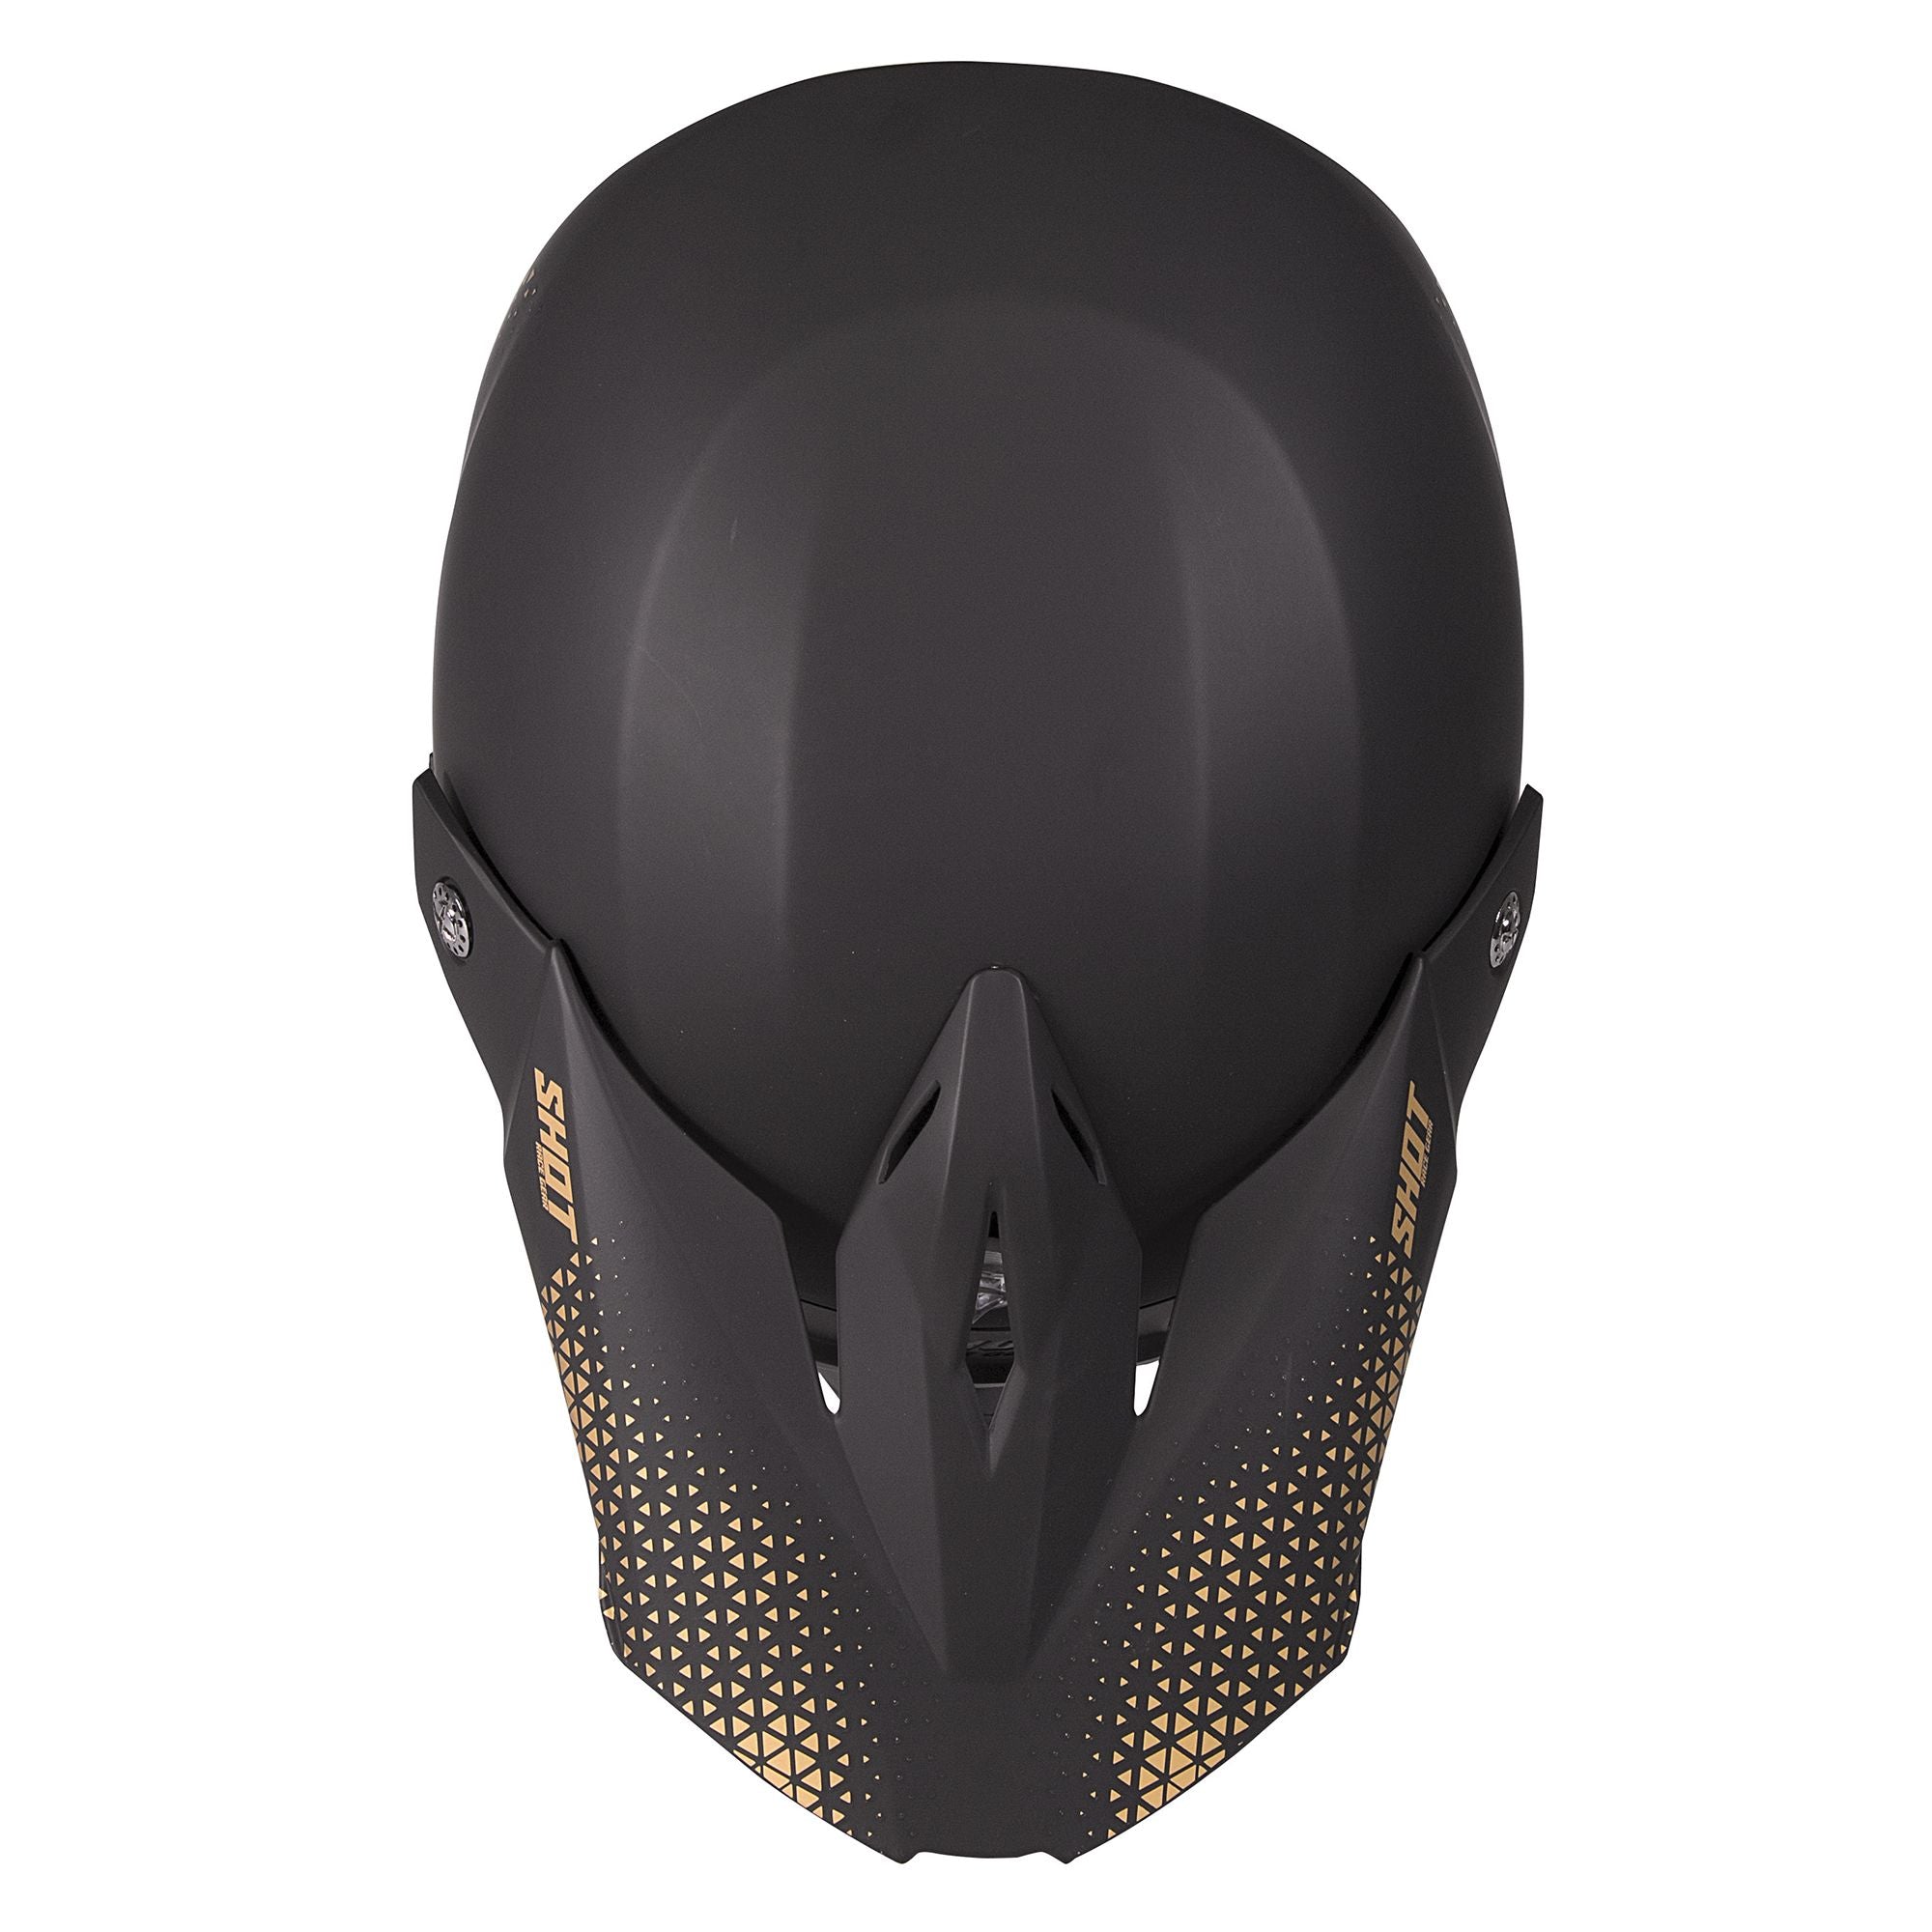 Load image into Gallery viewer, Shot Furious MX Helmet Adult - Raw Black Gold Matt
